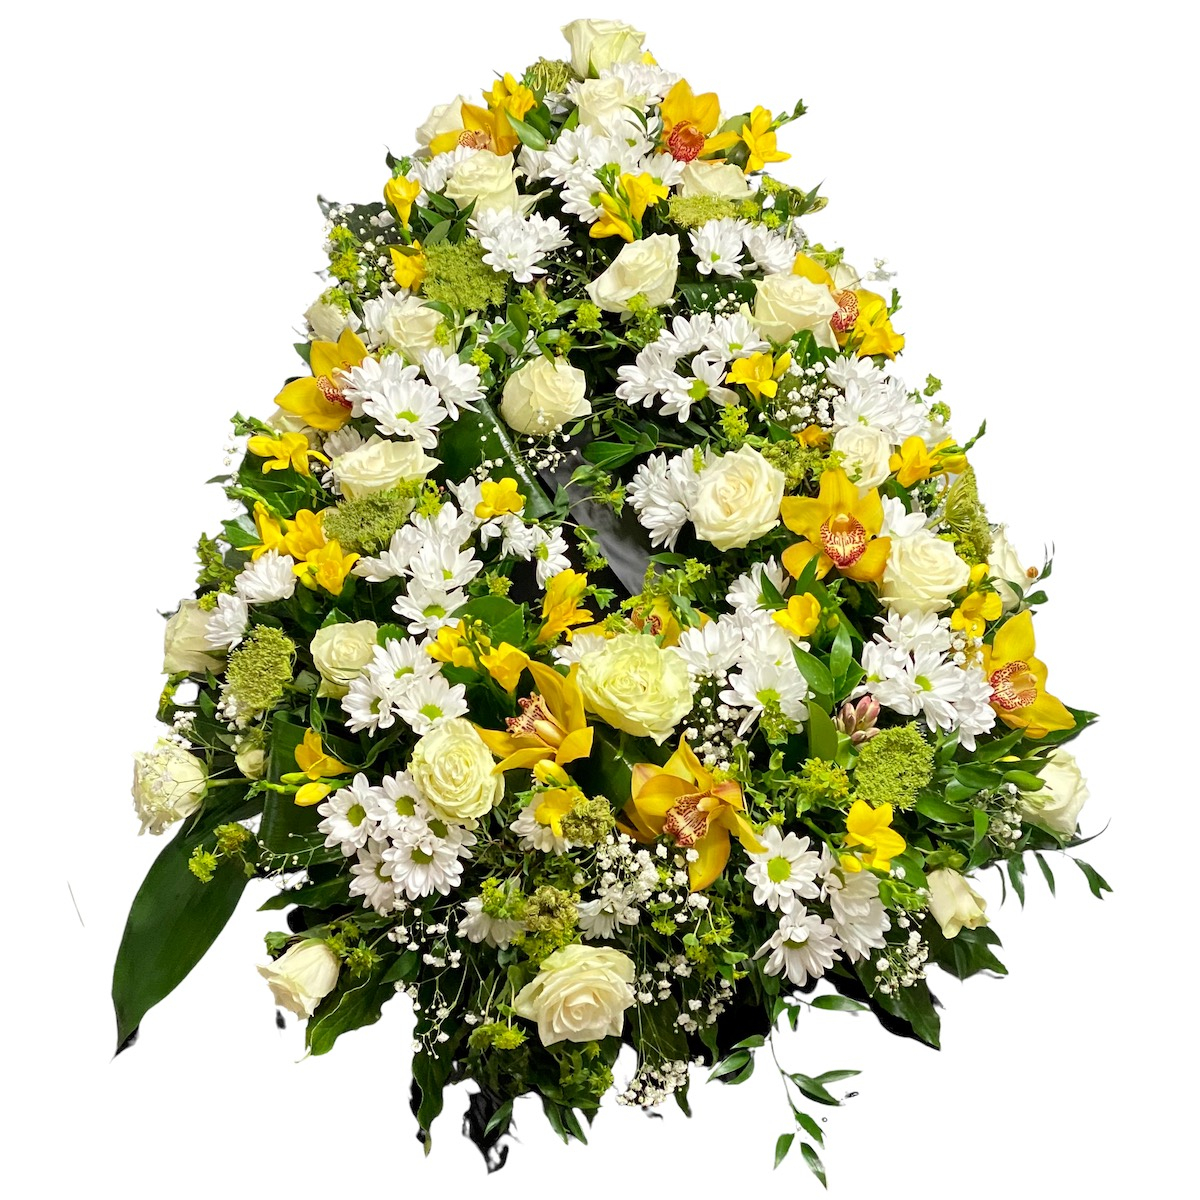 Coroana funerara clasica cu frezii, trandafiri, orhidee si crizanteme: Funerare